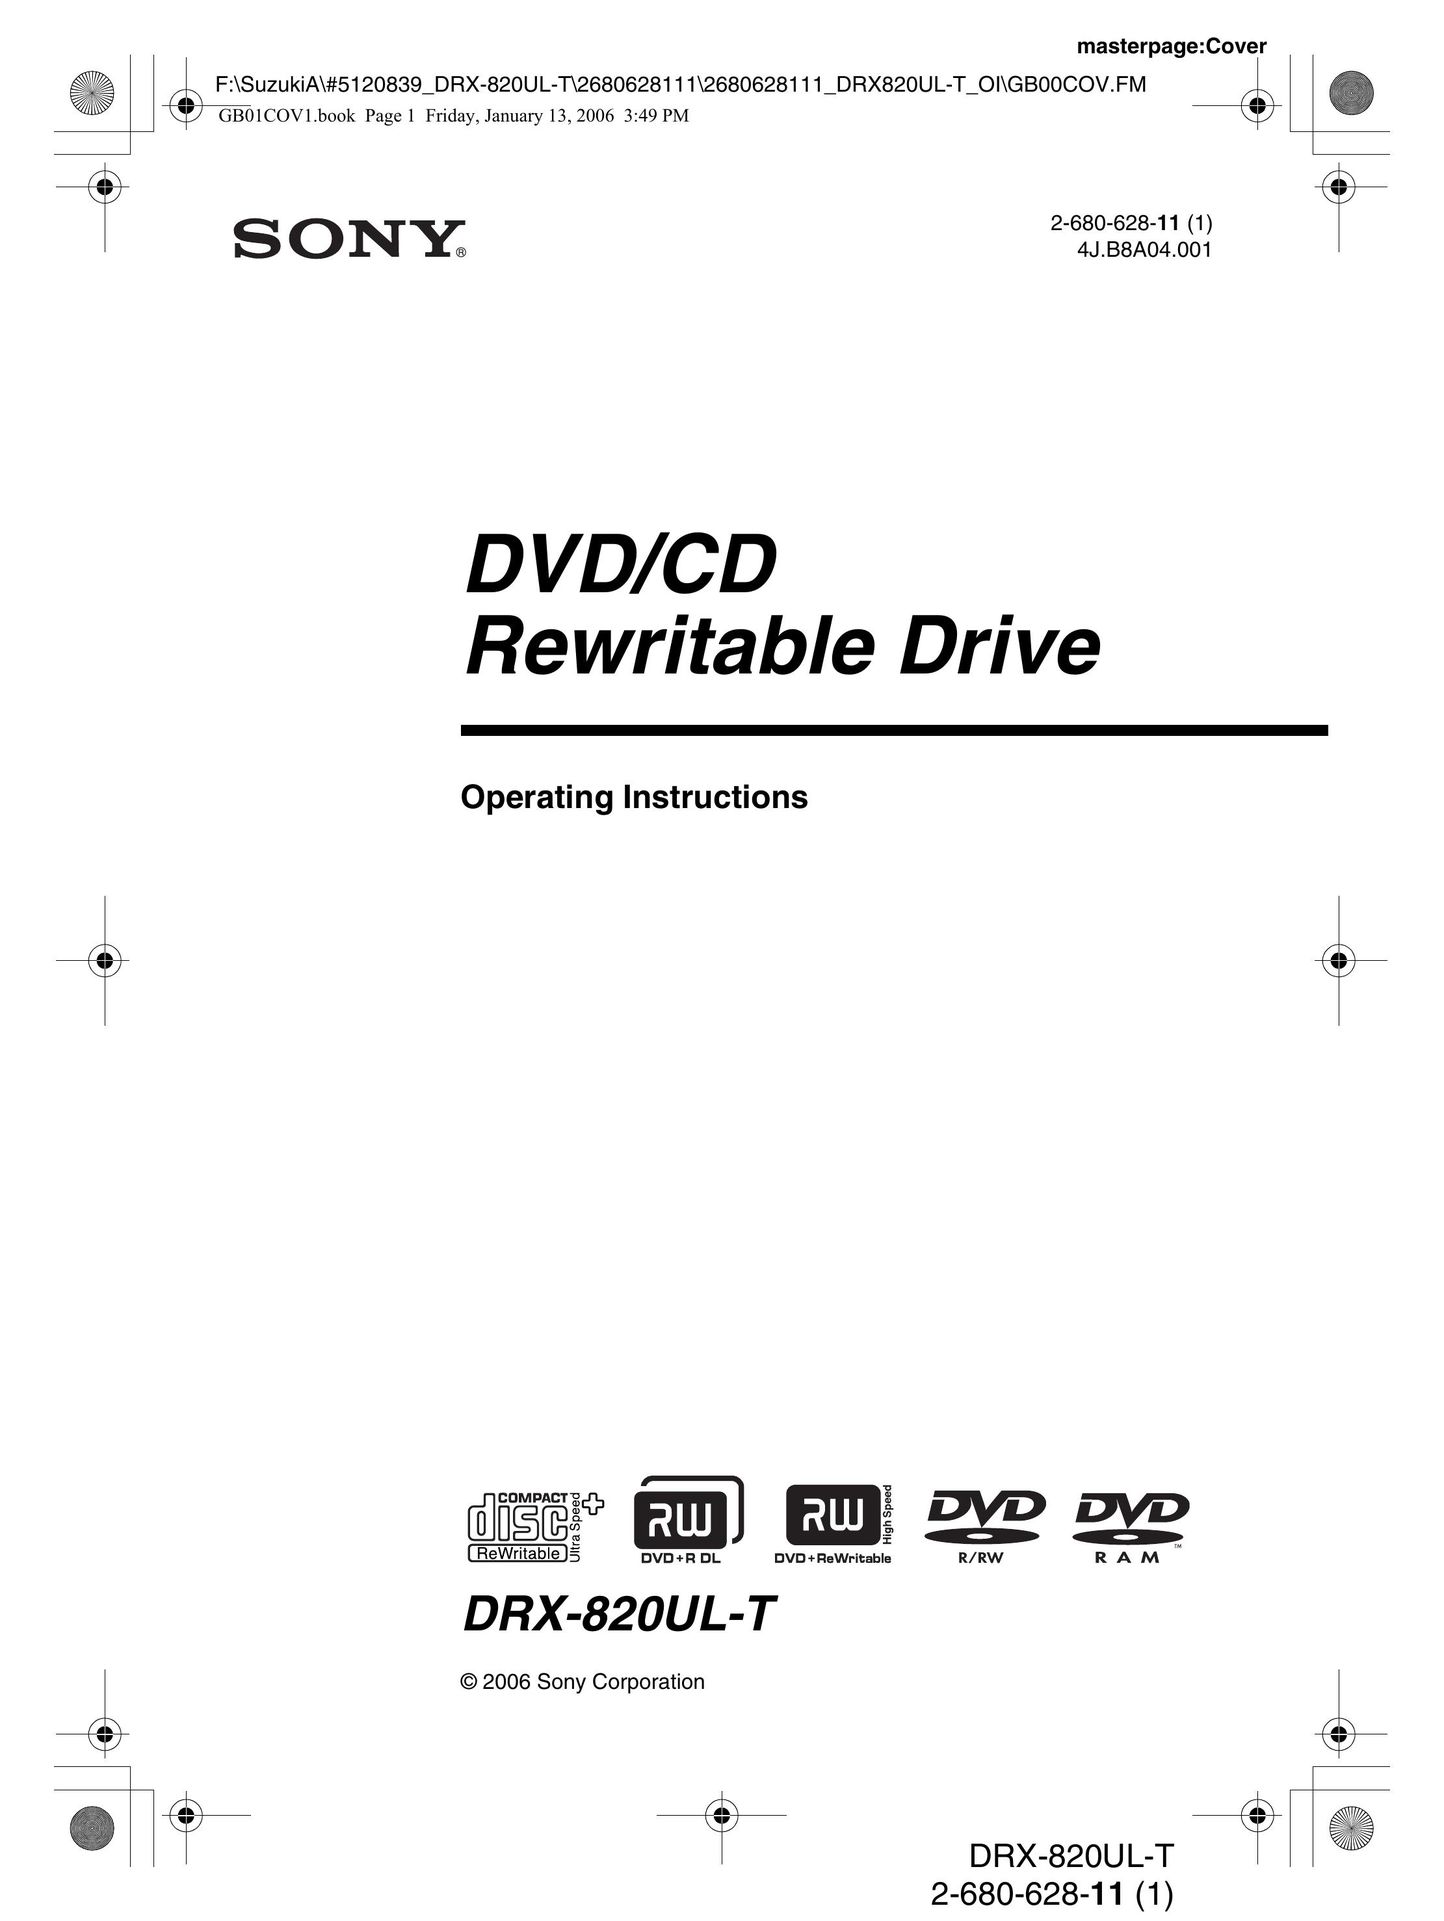 Sony DRX-820UL-T DVD Recorder User Manual